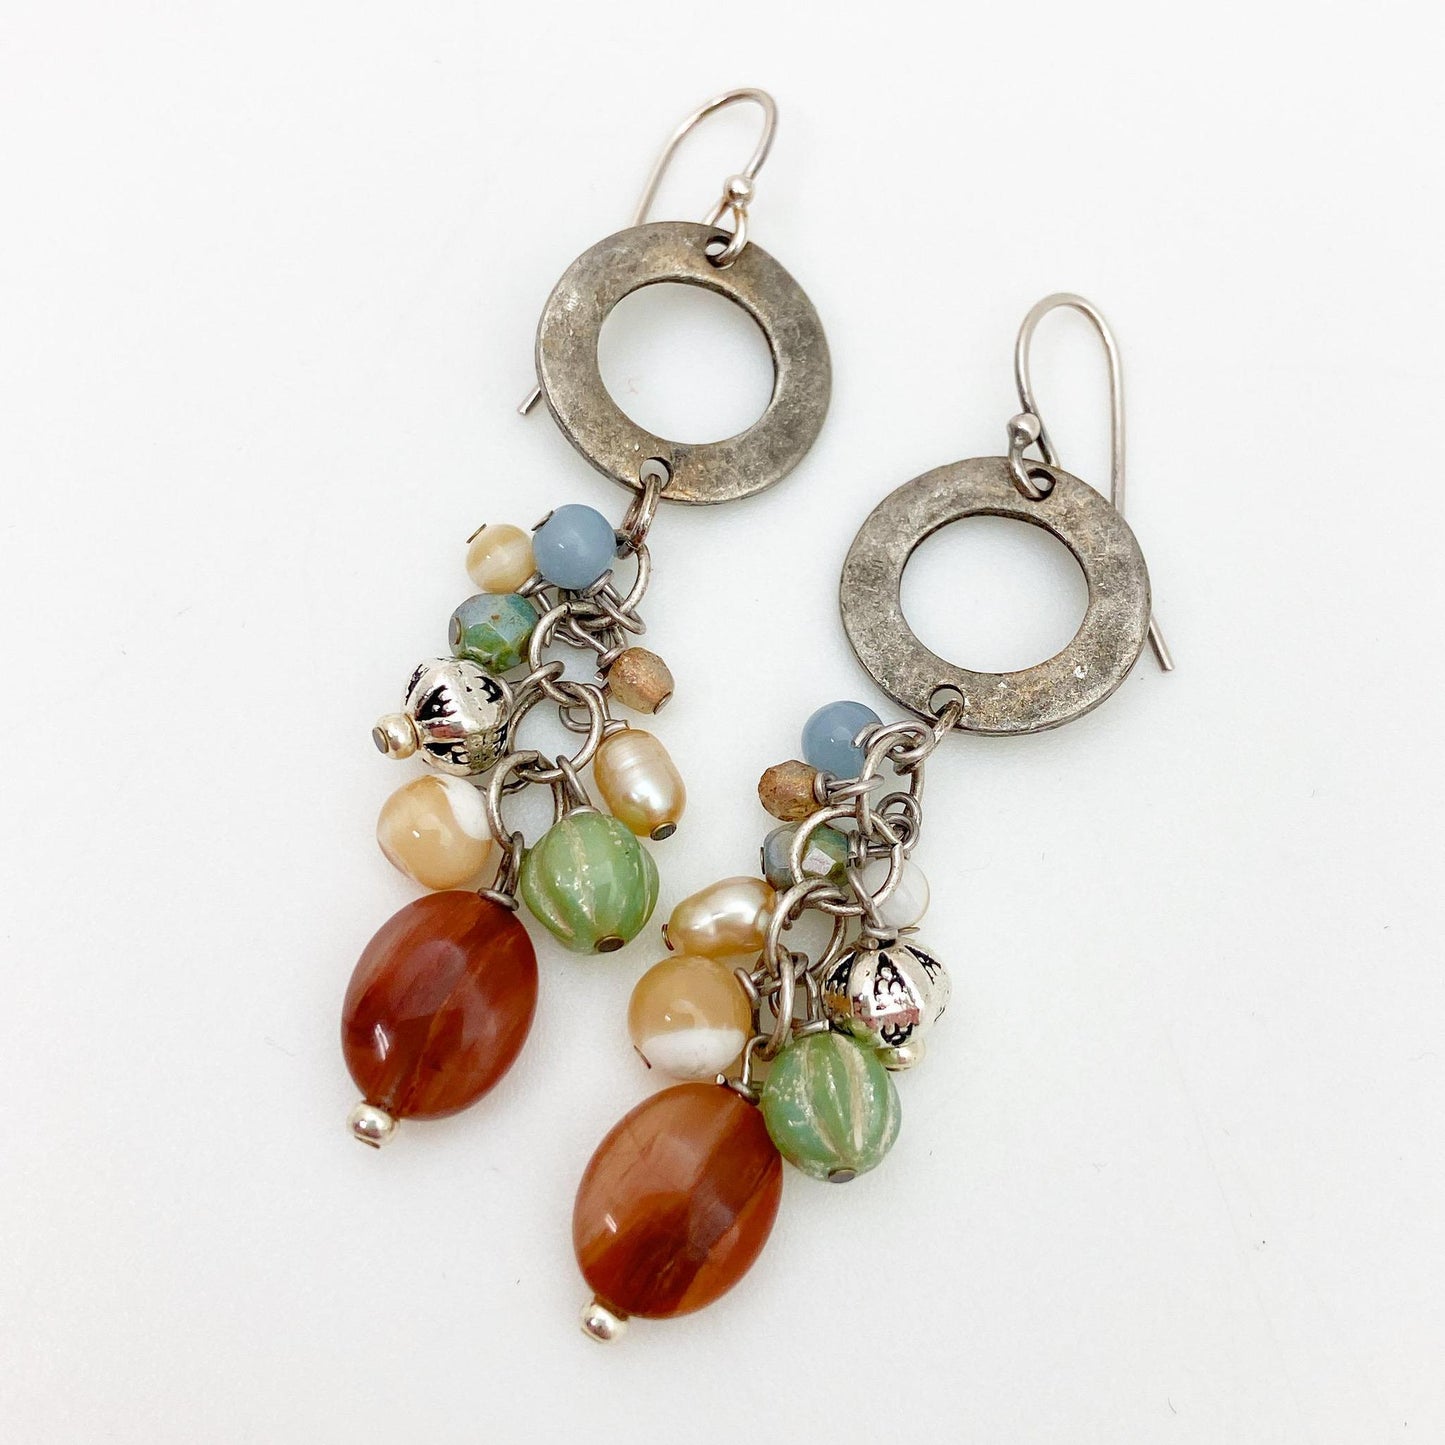 Earrings - "Refresh" - Jasper, Pearl, and Czech Glass